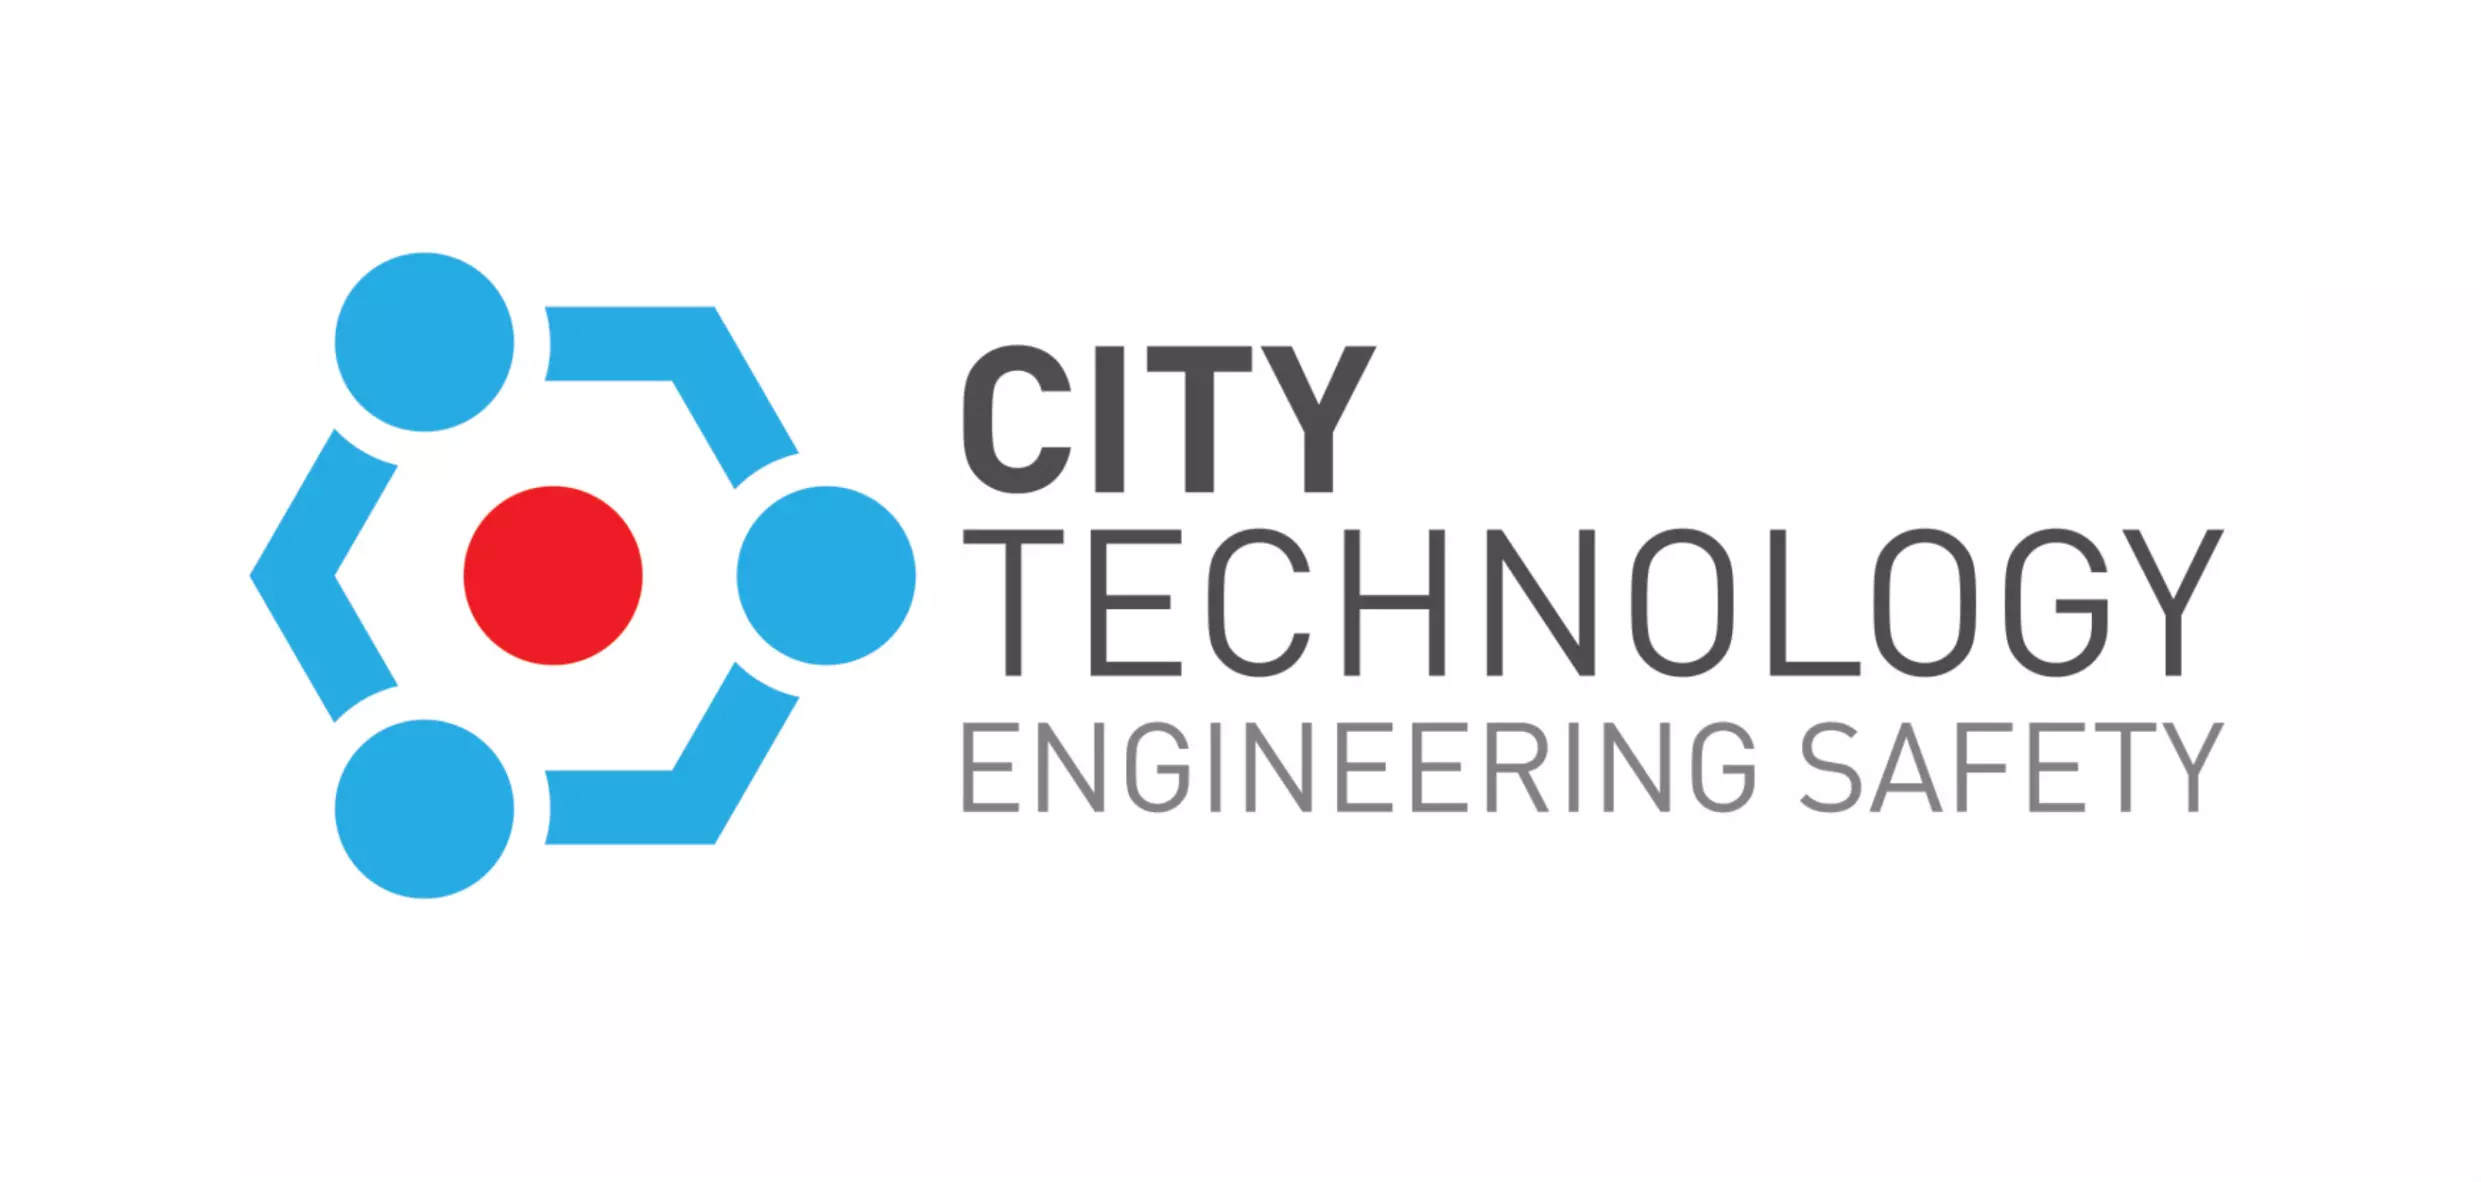 Tech limited. Технолоджи Сити. Логотип City Technology. Логотип сититенолоджи. Technology Ltd логотип.